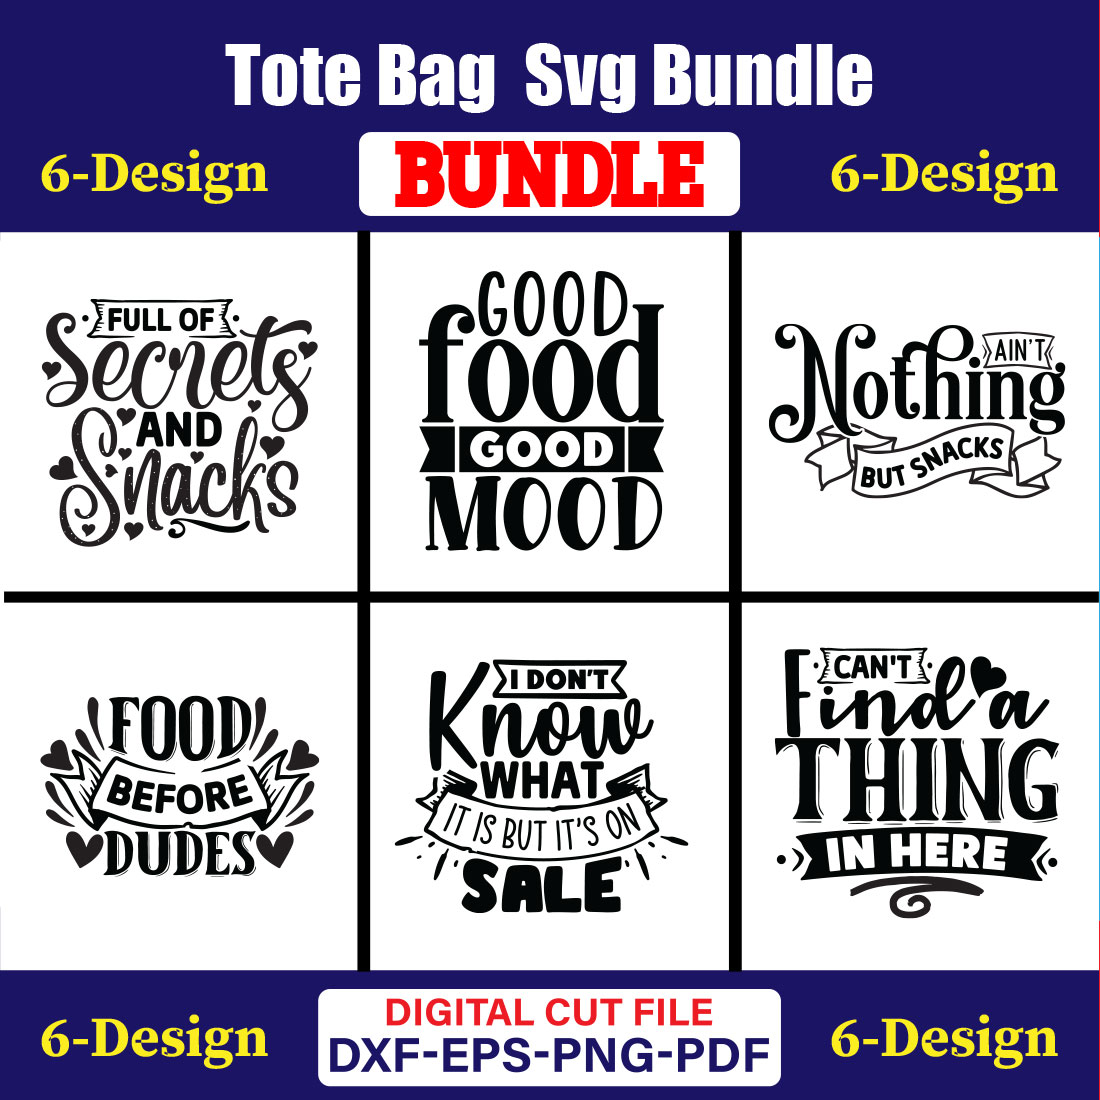 Tote Bag T-shirt Design Bundle Vol-01 cover image.